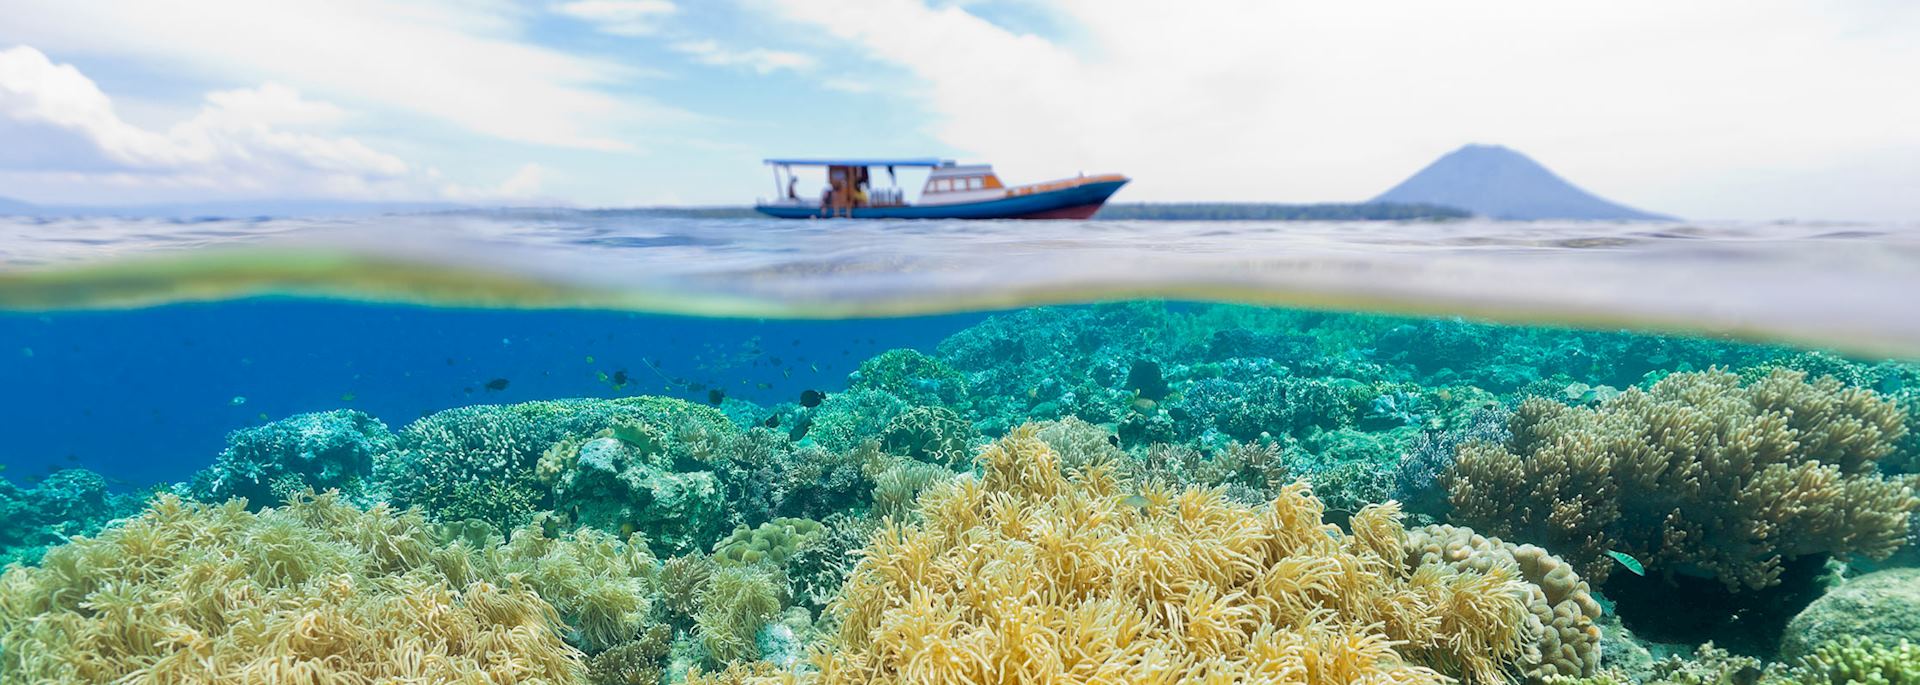 Coral reef in Manado